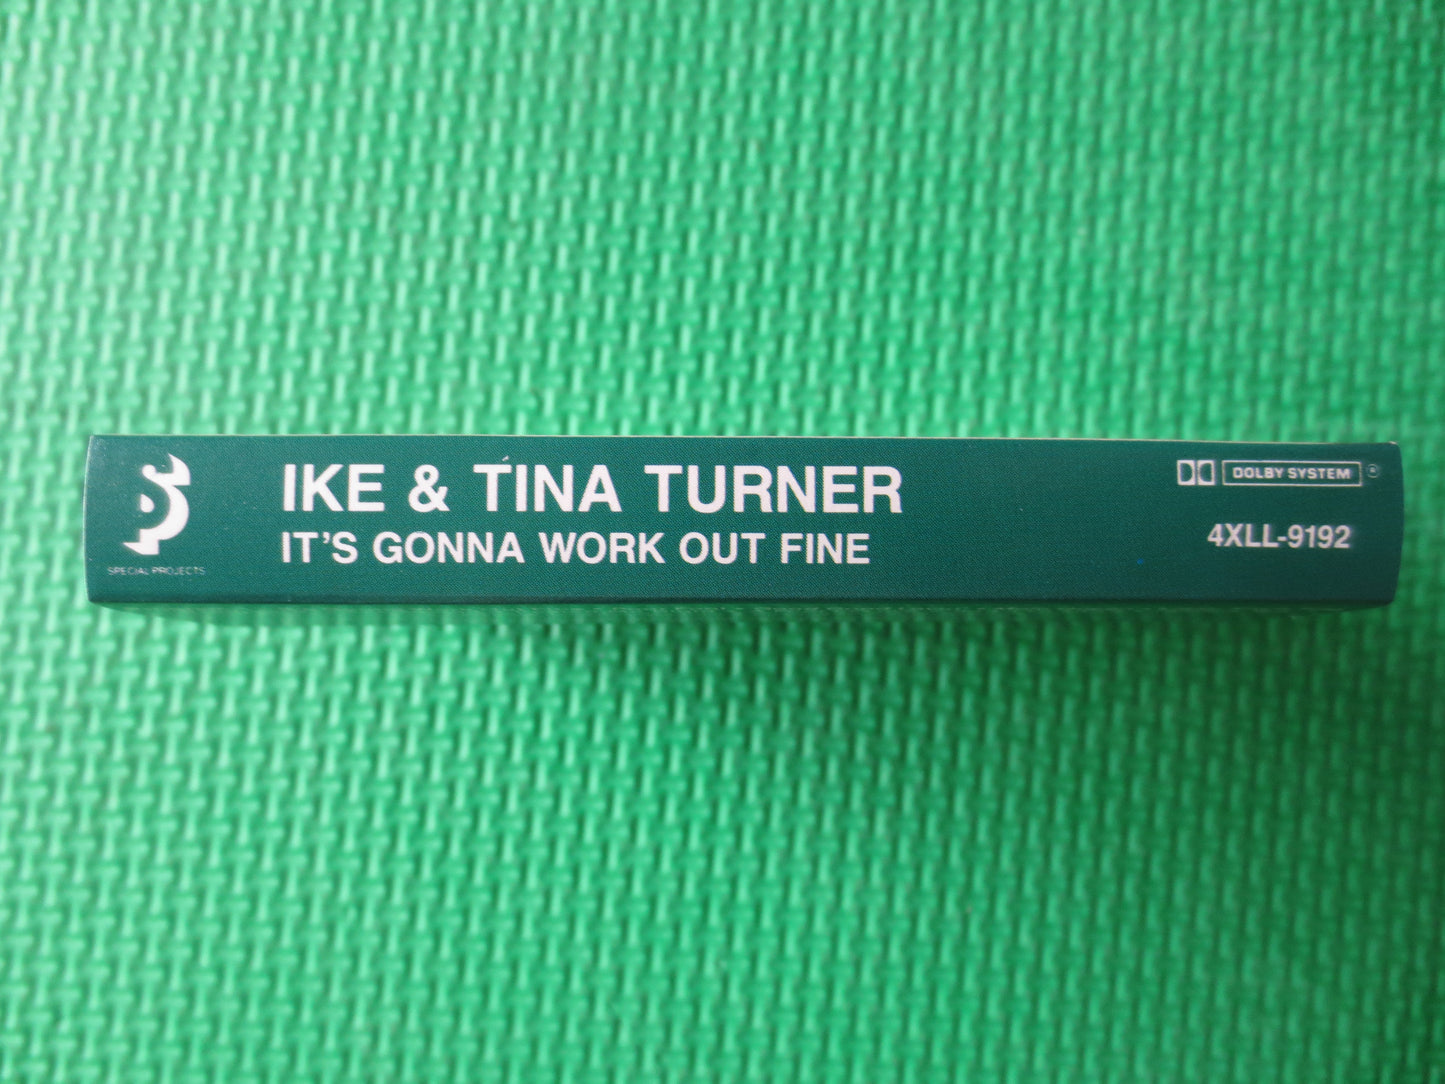 IKE and TINA TURNER, Ike Turner Tapes, Tina Turner Tapes, Tape Cassette, Pop Music Cassette, Music Tape, Tape, 1985 Cassette